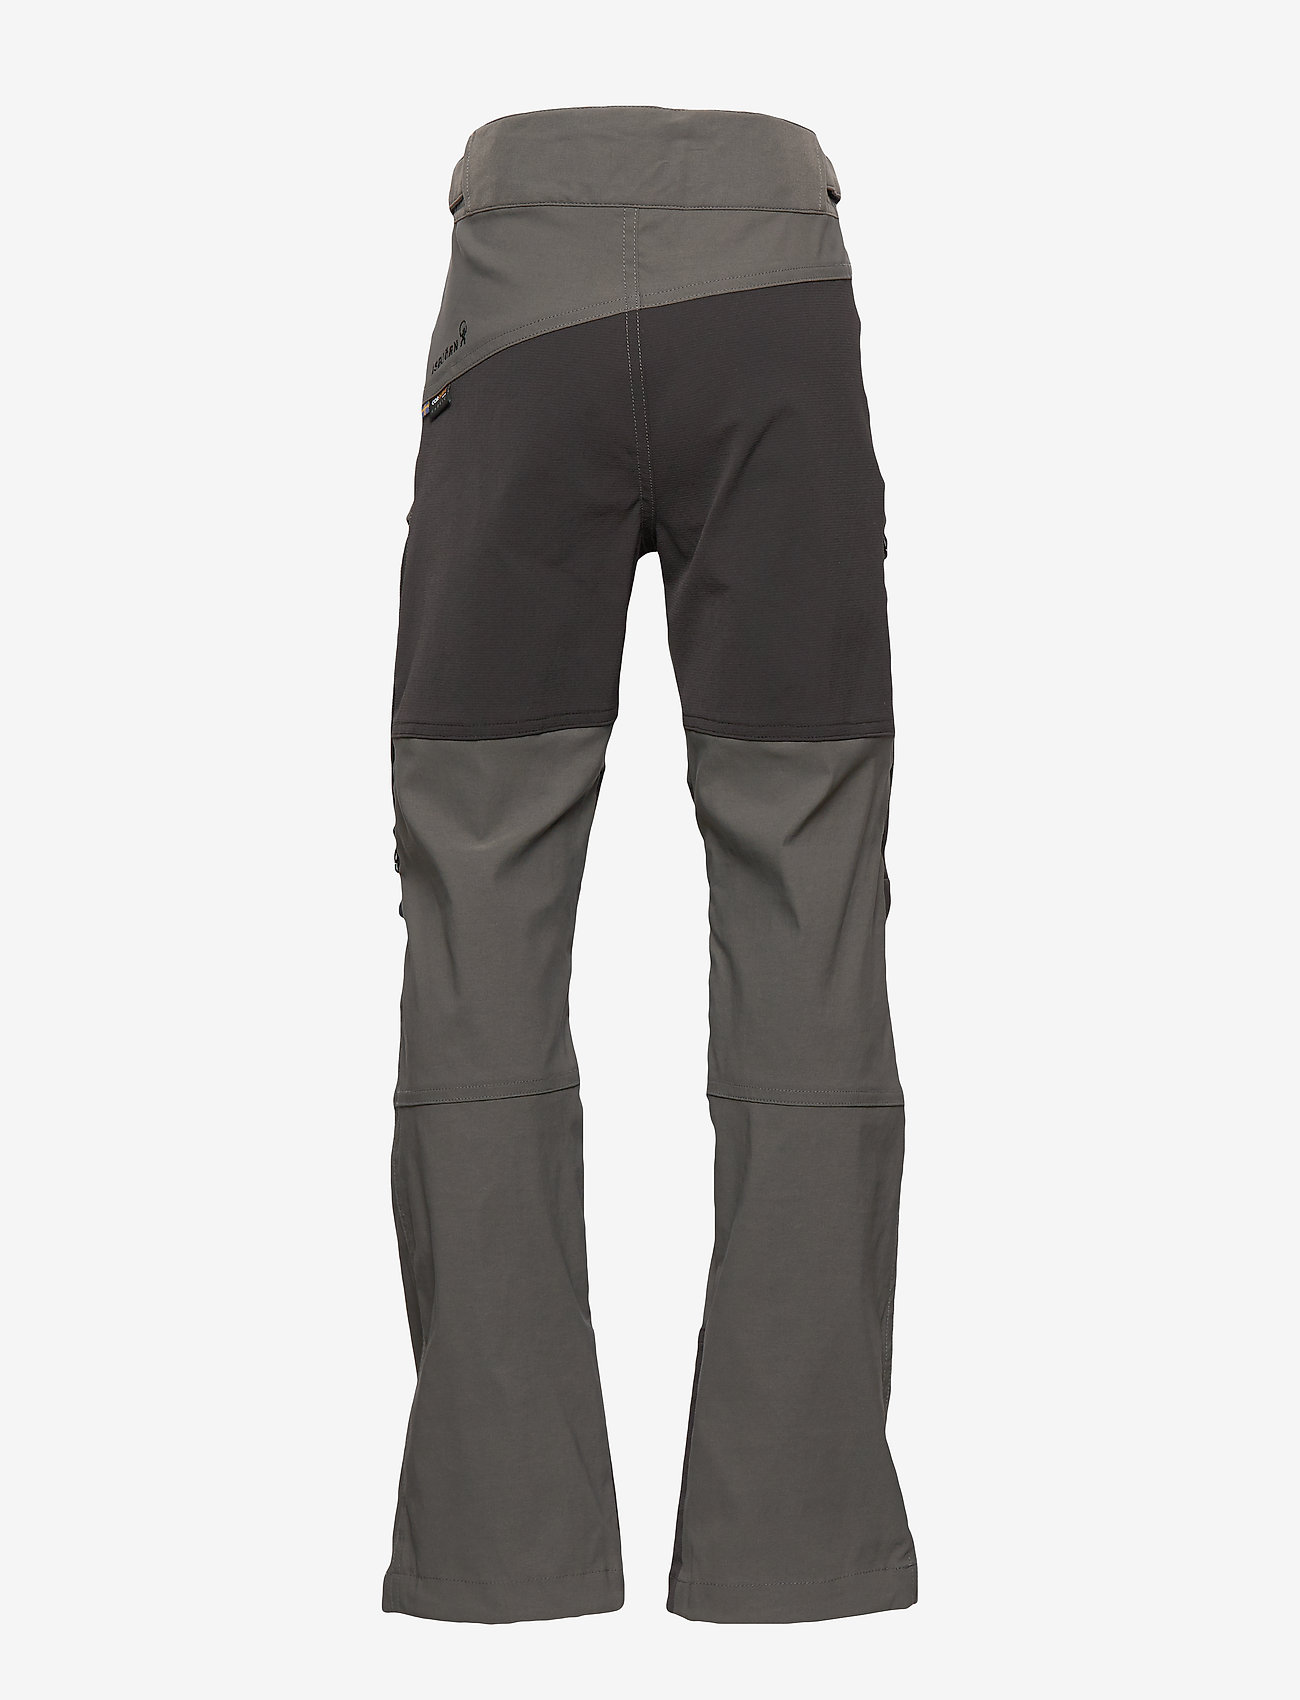 ISBJÖRN of Sweden - TRAPPER Pant II Teens - outdoor pants - graphite - 1